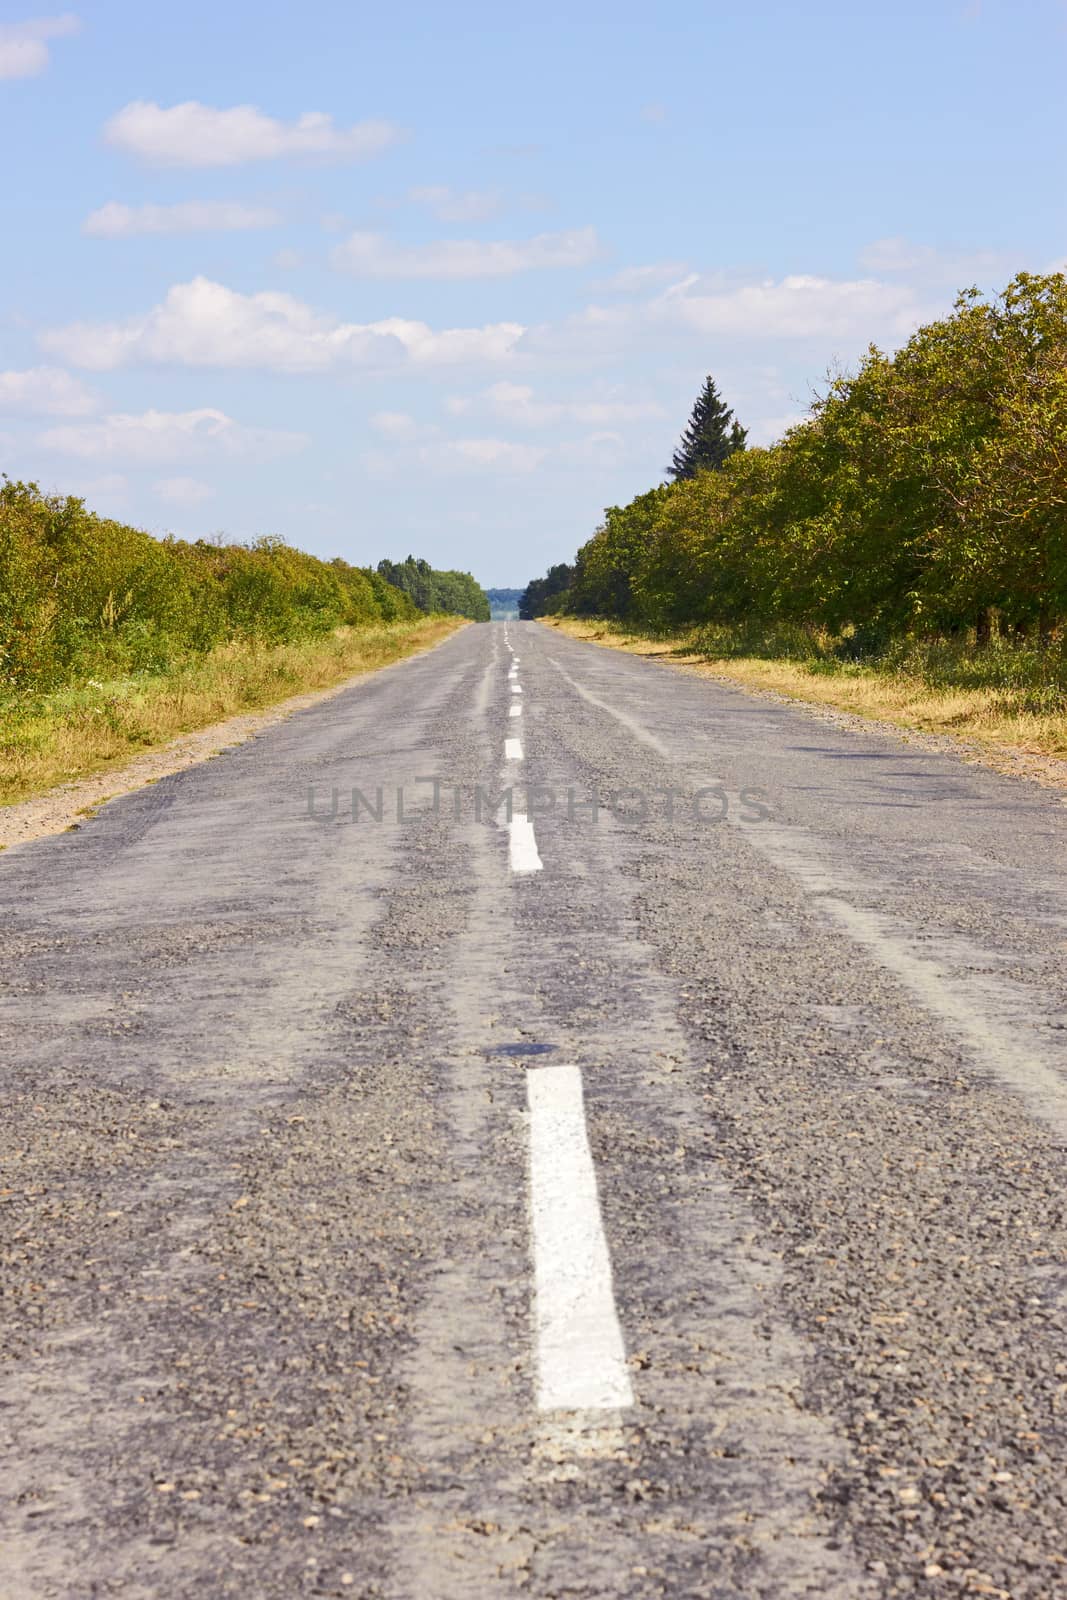 Rural roads covered with asphalt in summertime